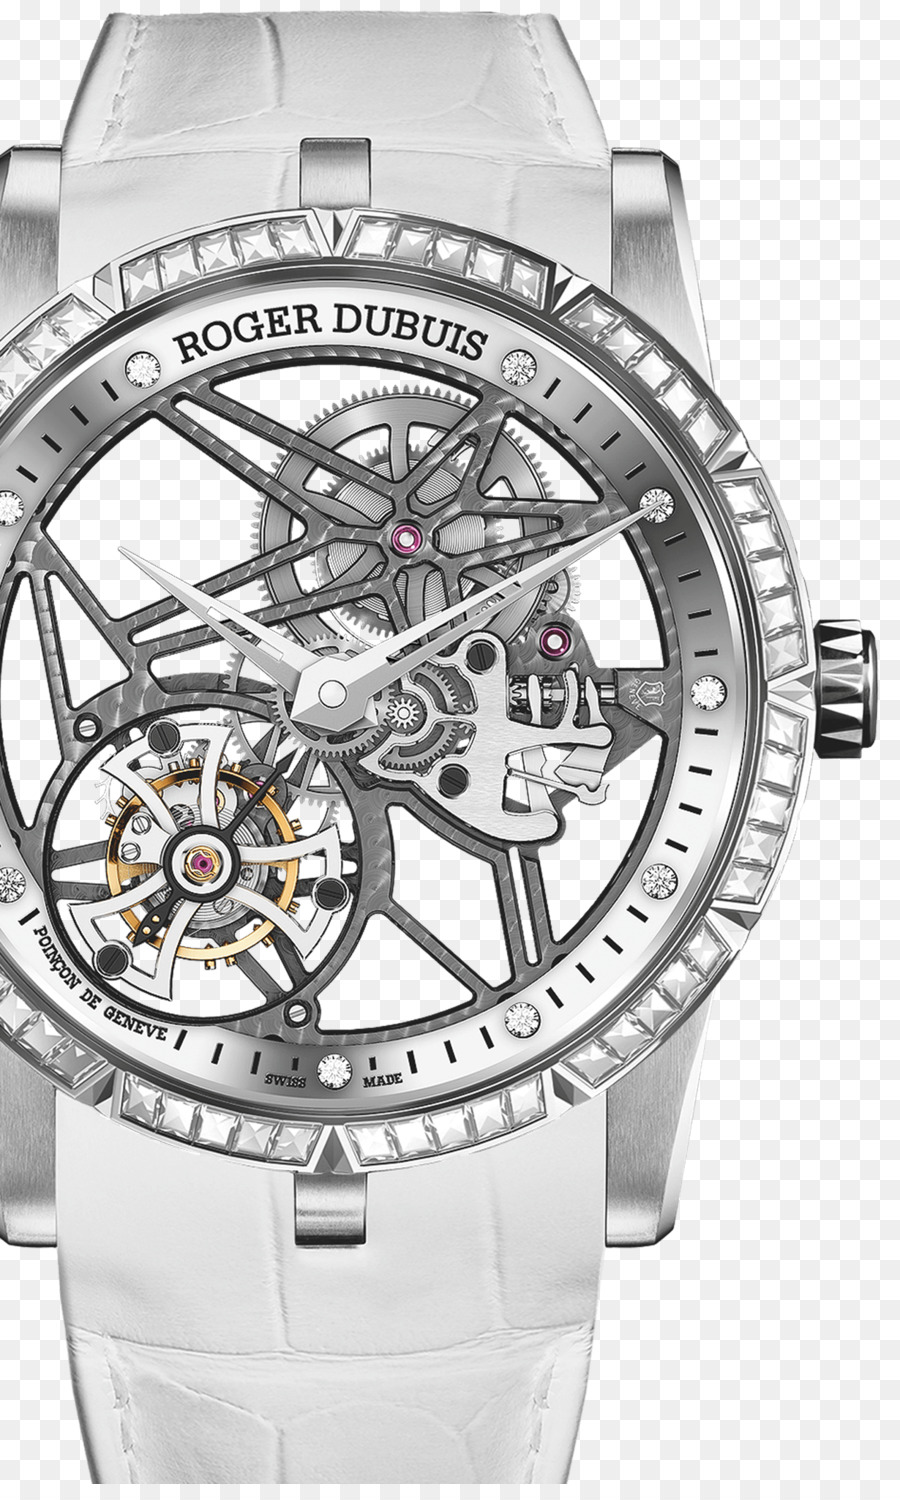 Roger Dubuis Uhr Genfer Siegel Tourbillon Manufacture d ' Horlogerie - Uhr